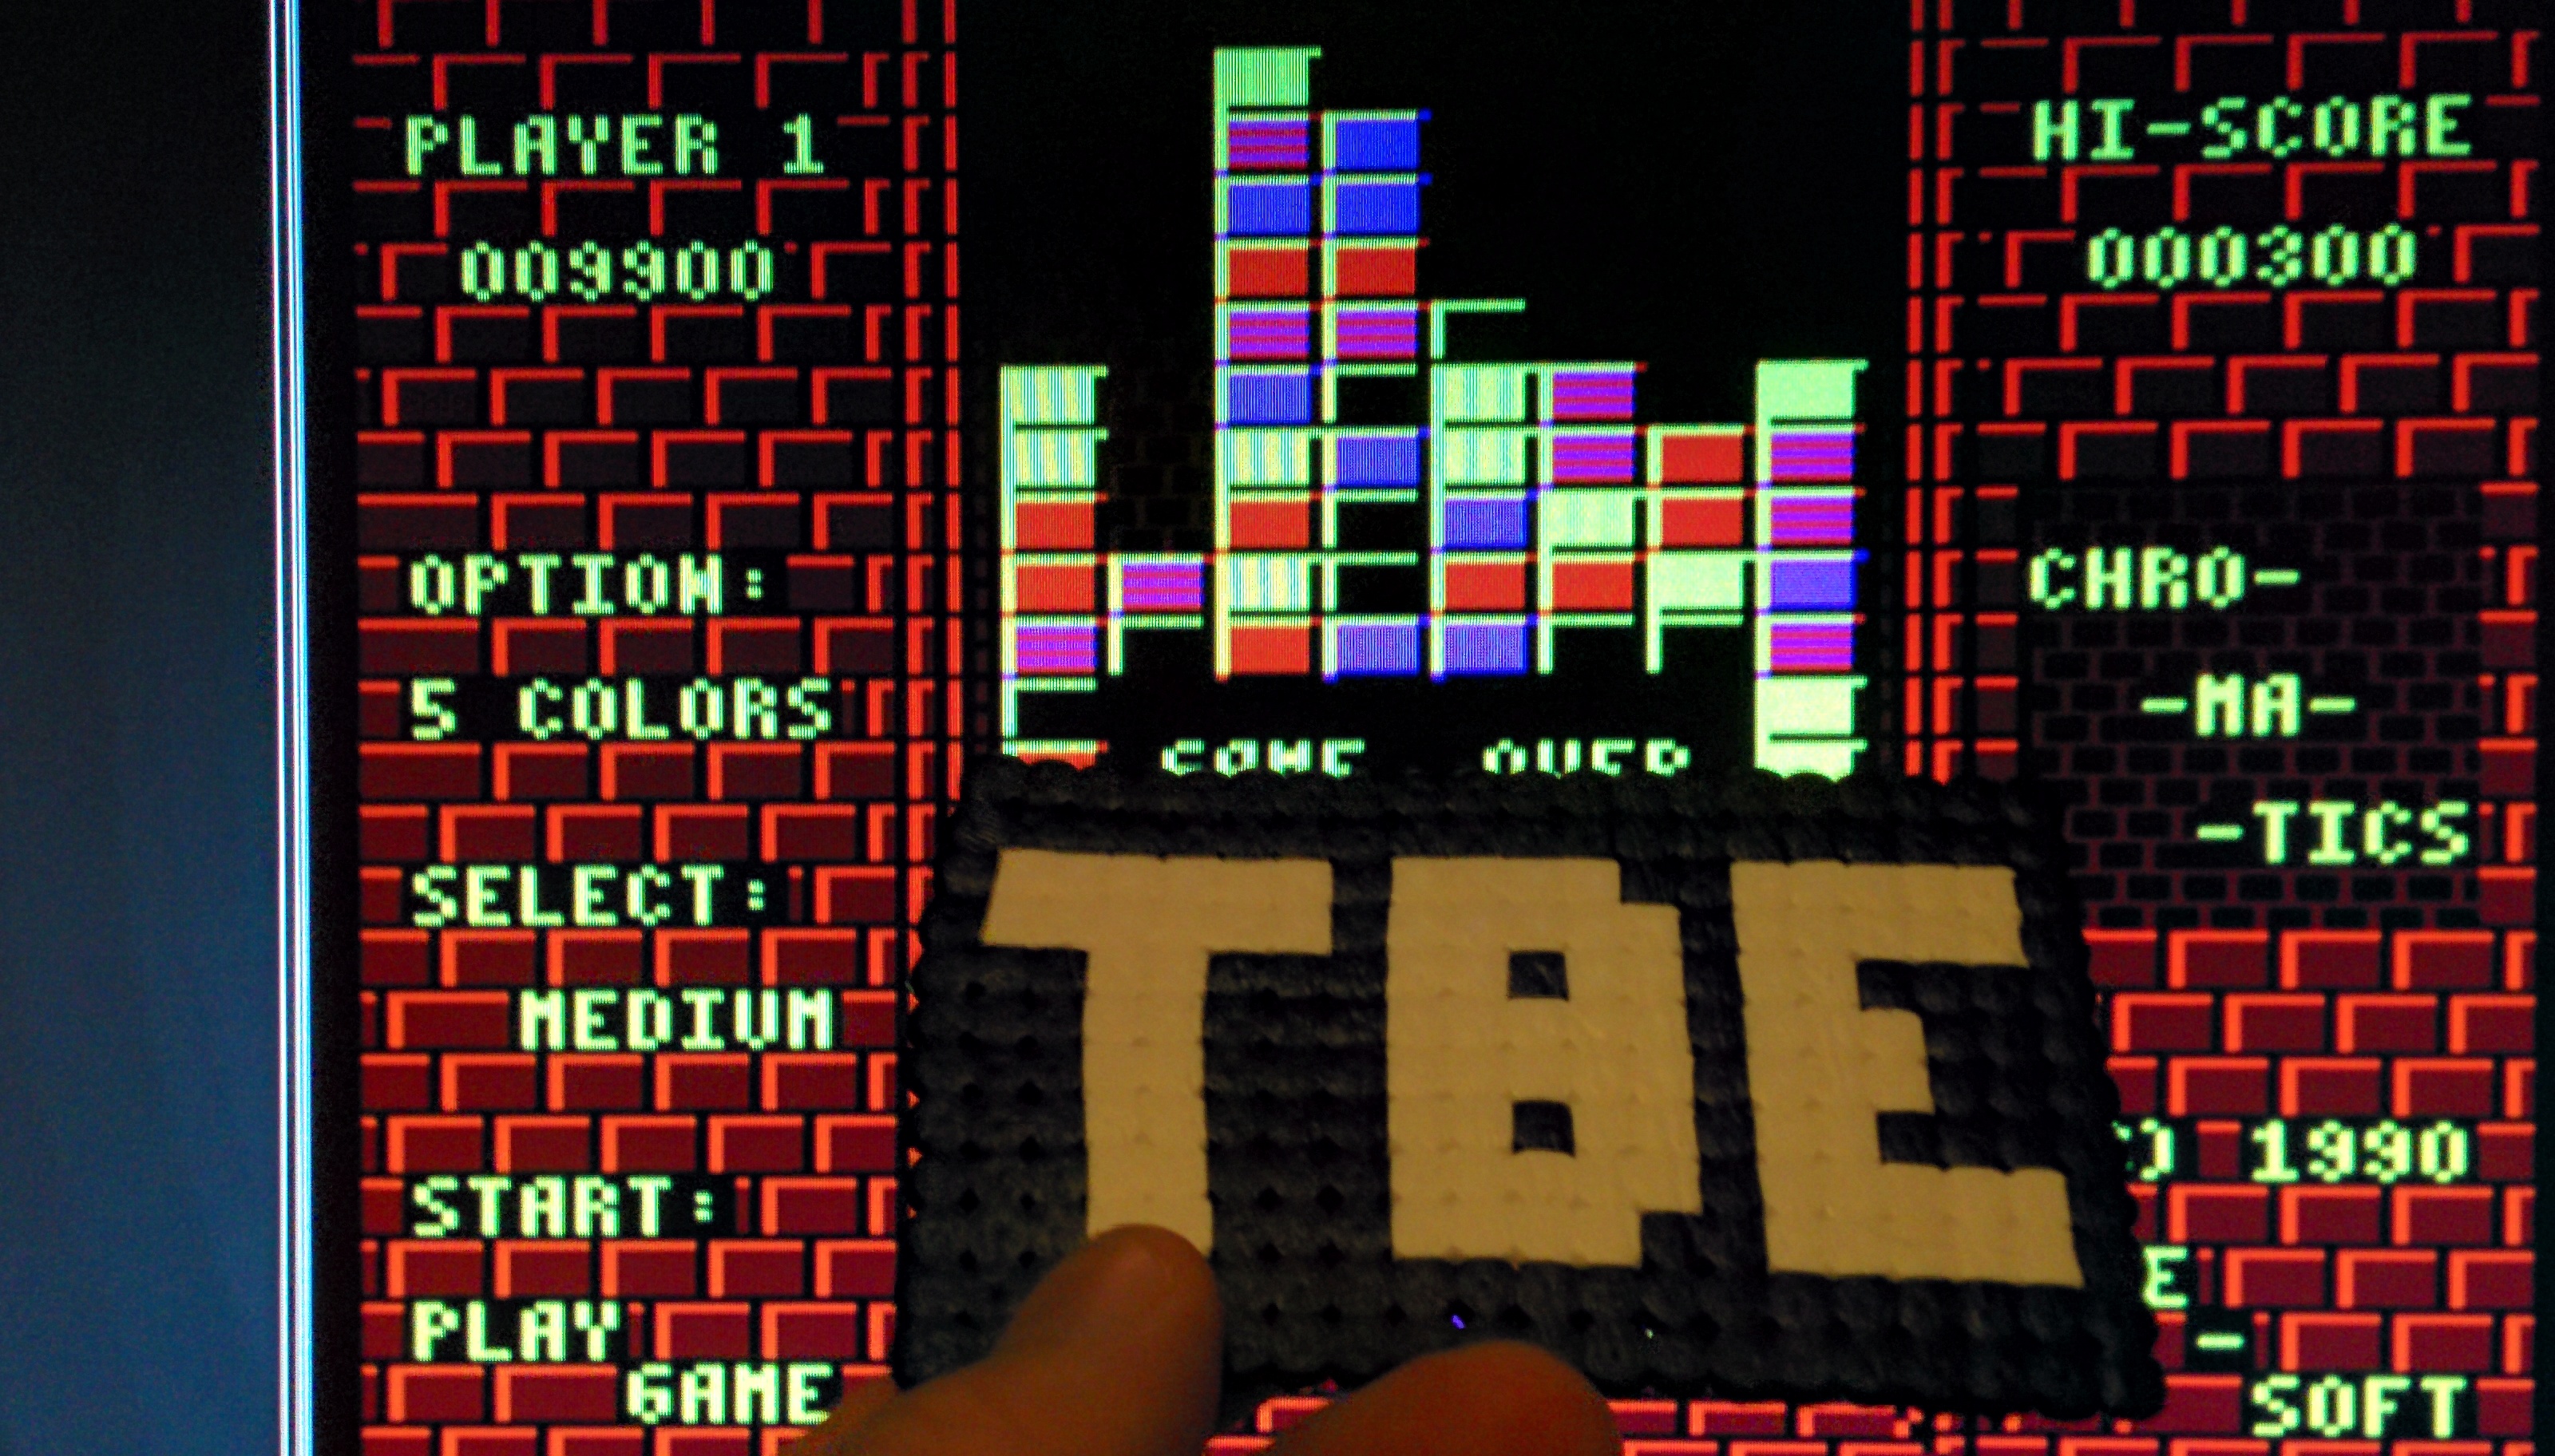 Sixx: Chro-Ma-Tics: 5 Colors: Medium (Atari 400/800/XL/XE Emulated) 9,900 points on 2014-10-30 11:46:14